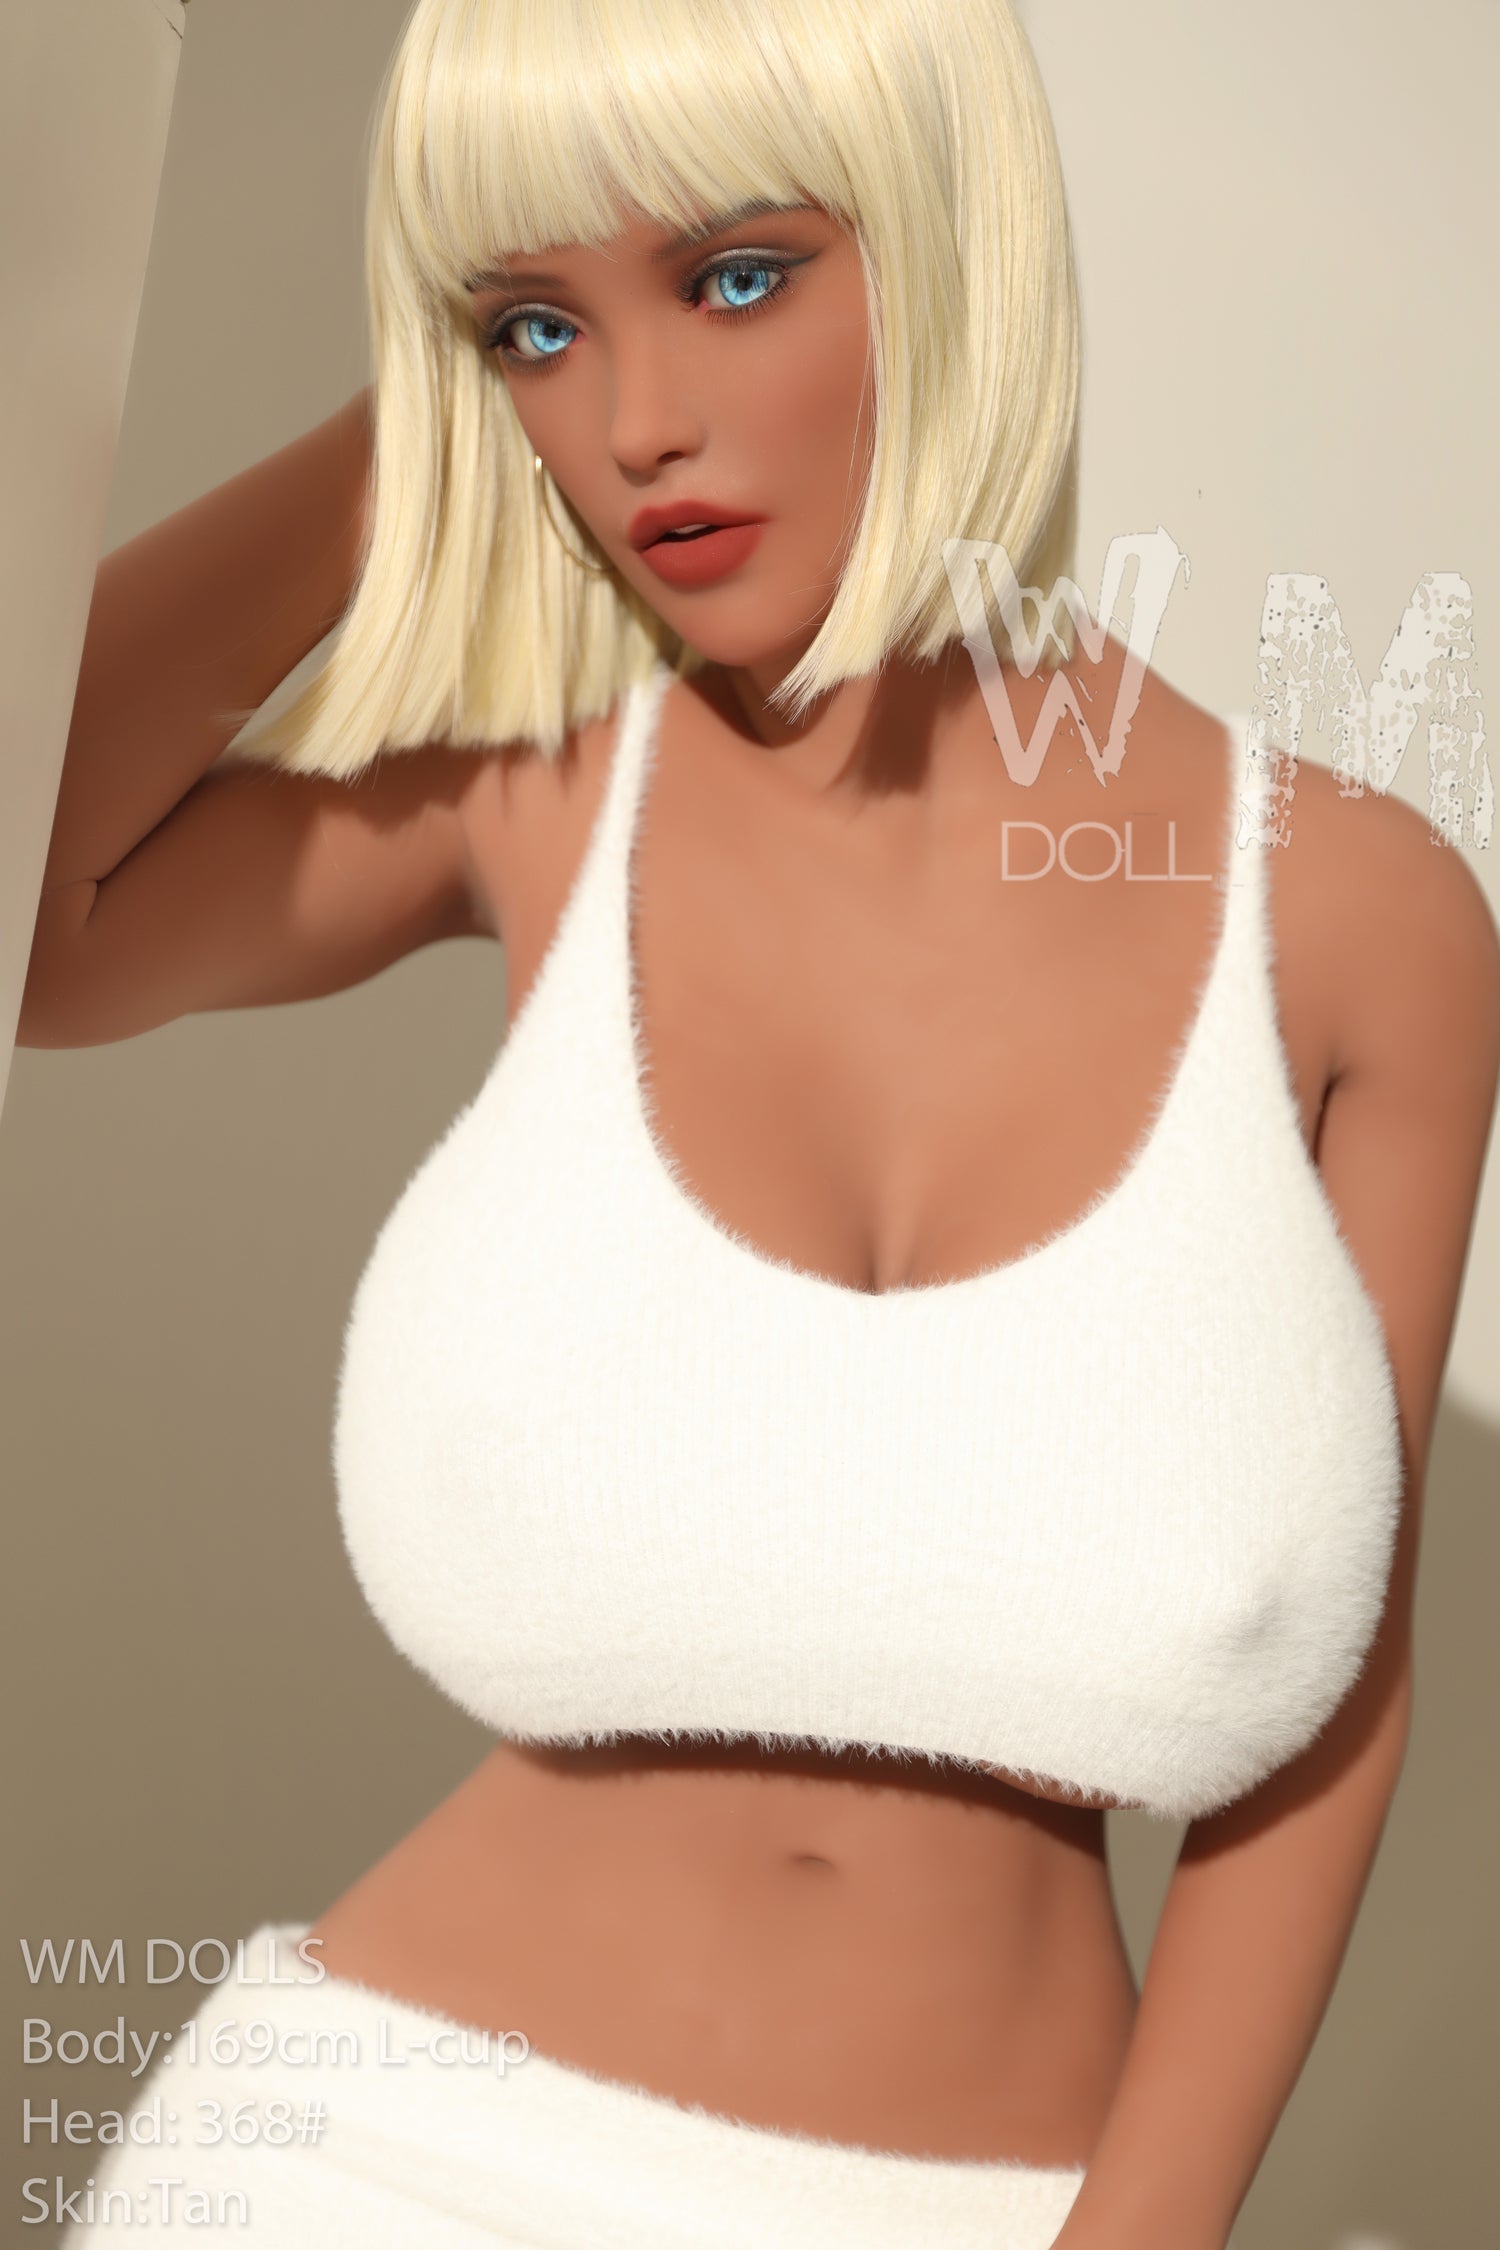 WM DOLL 169 CM L TPE - Madelyn | Buy Sex Dolls at DOLLS ACTUALLY